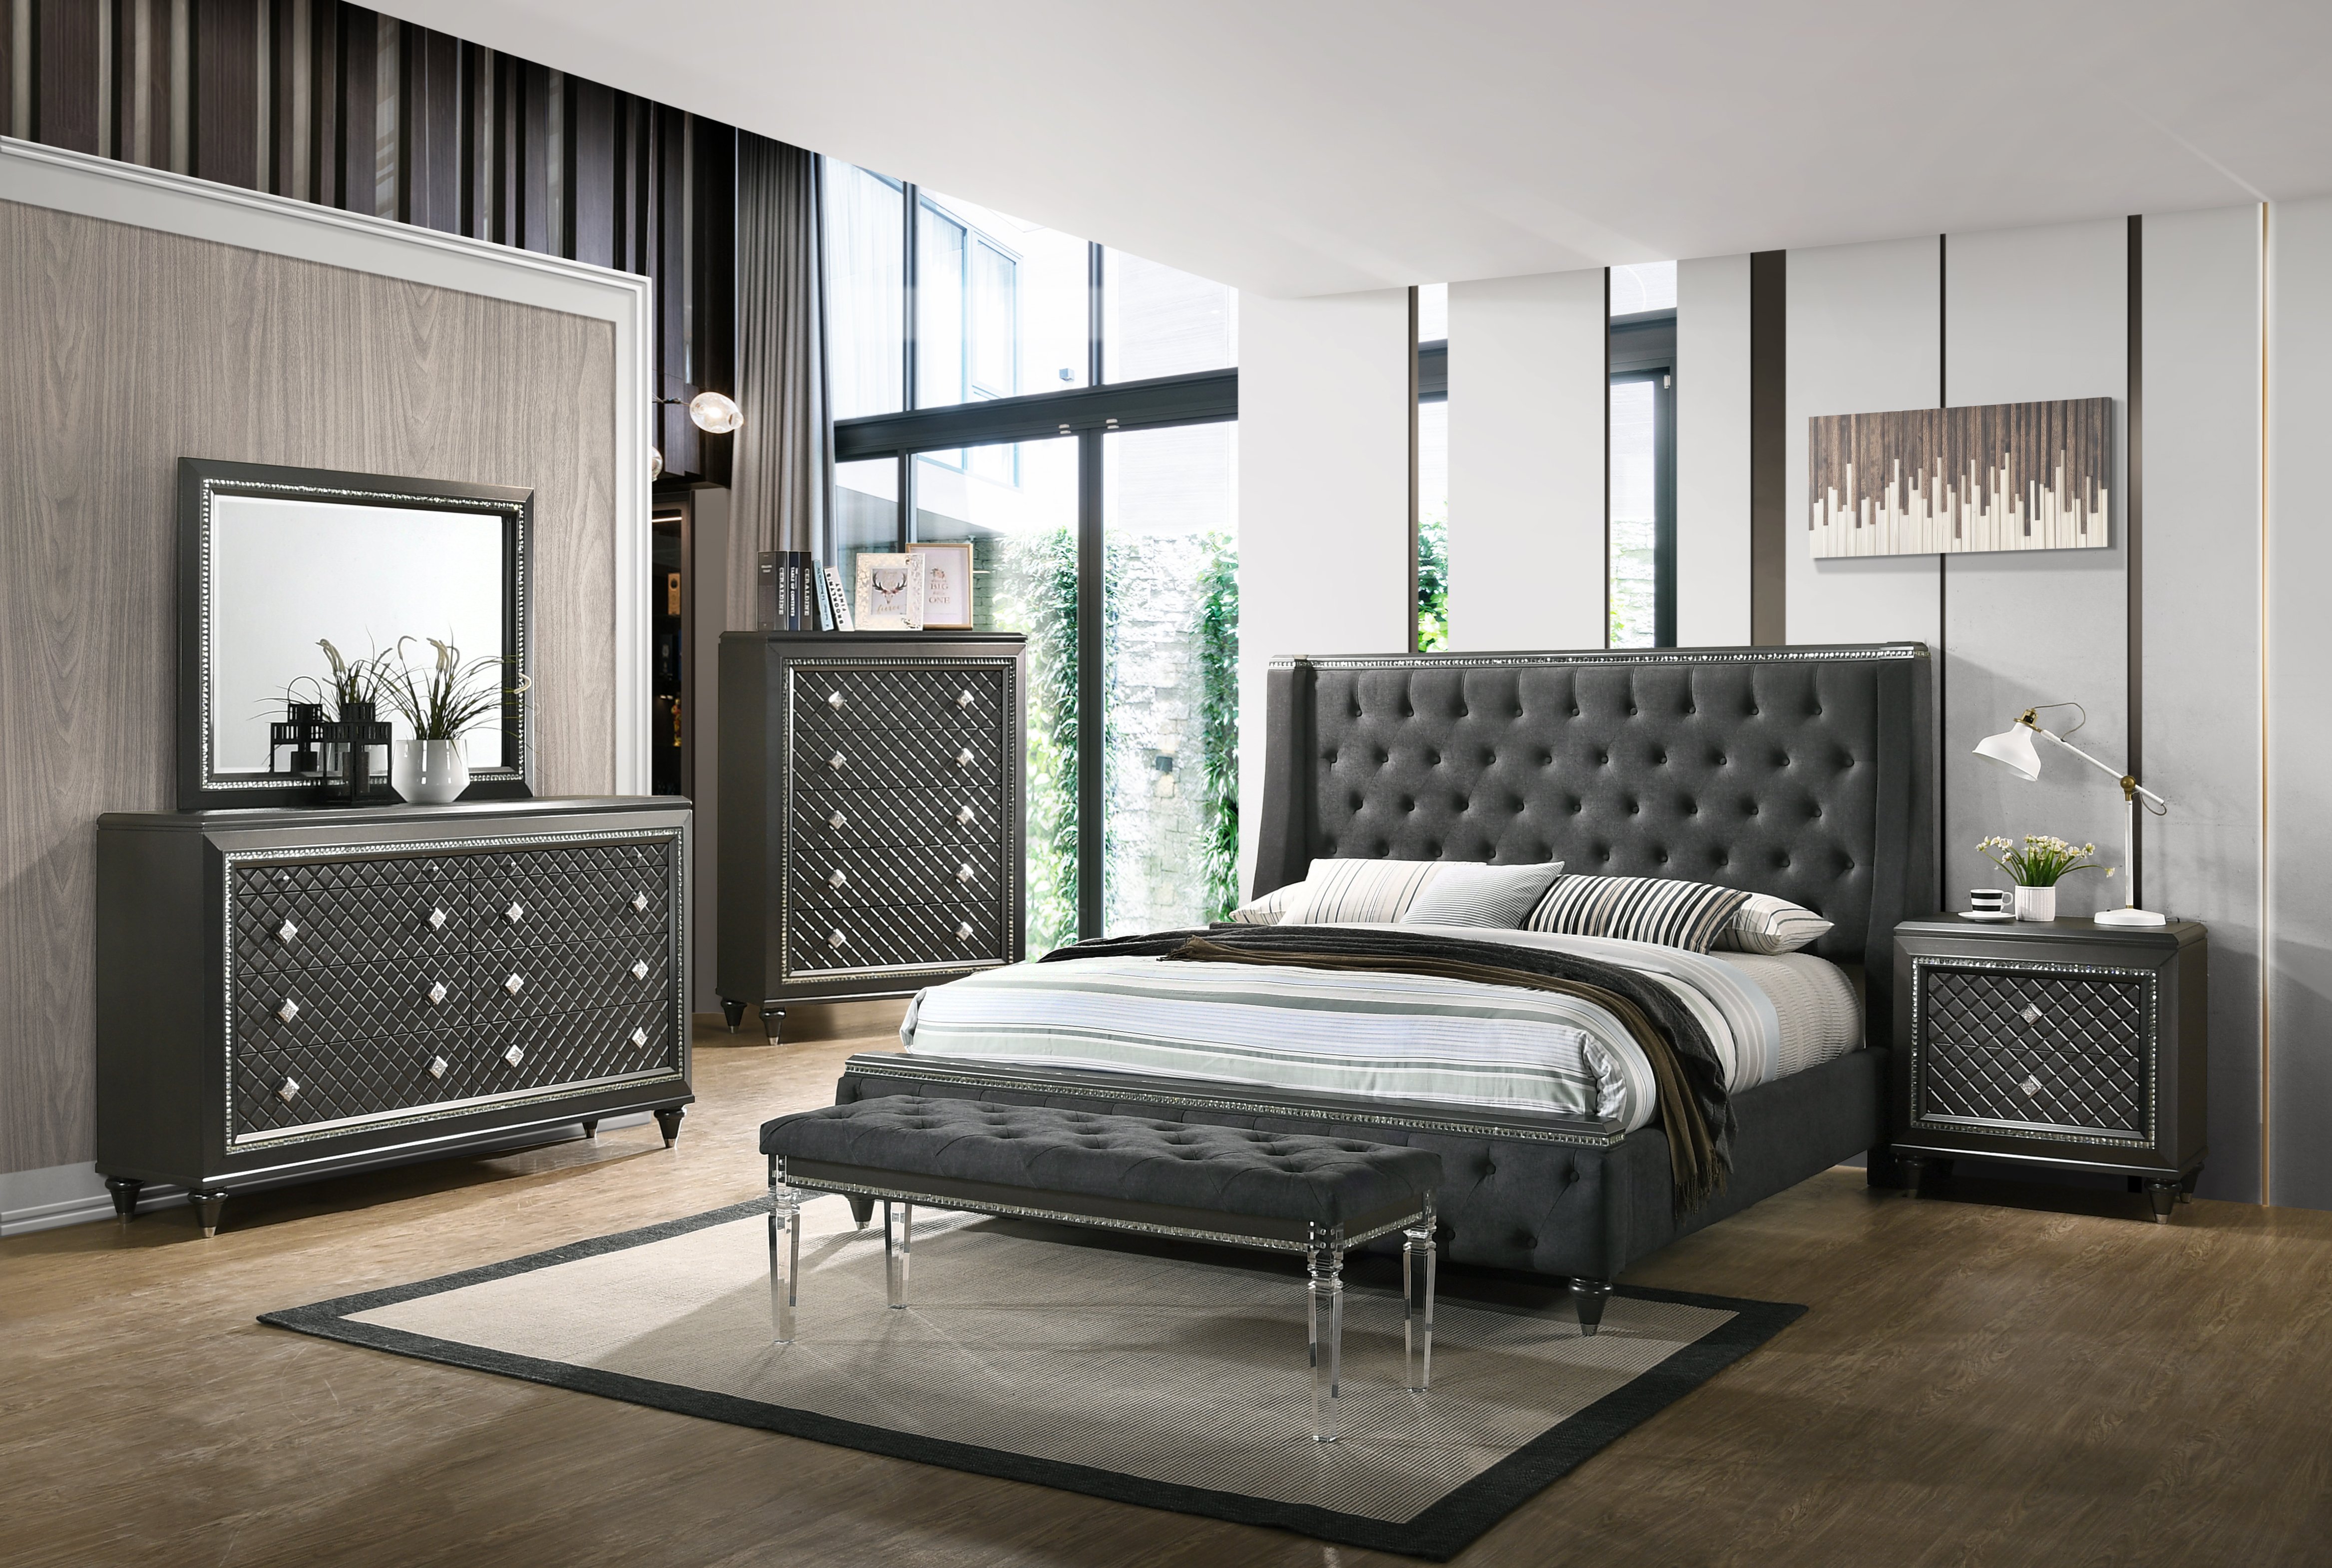 Hs Contemporary 6pc Queen Size Bedroom, Grey Queen Size Bedroom Sets